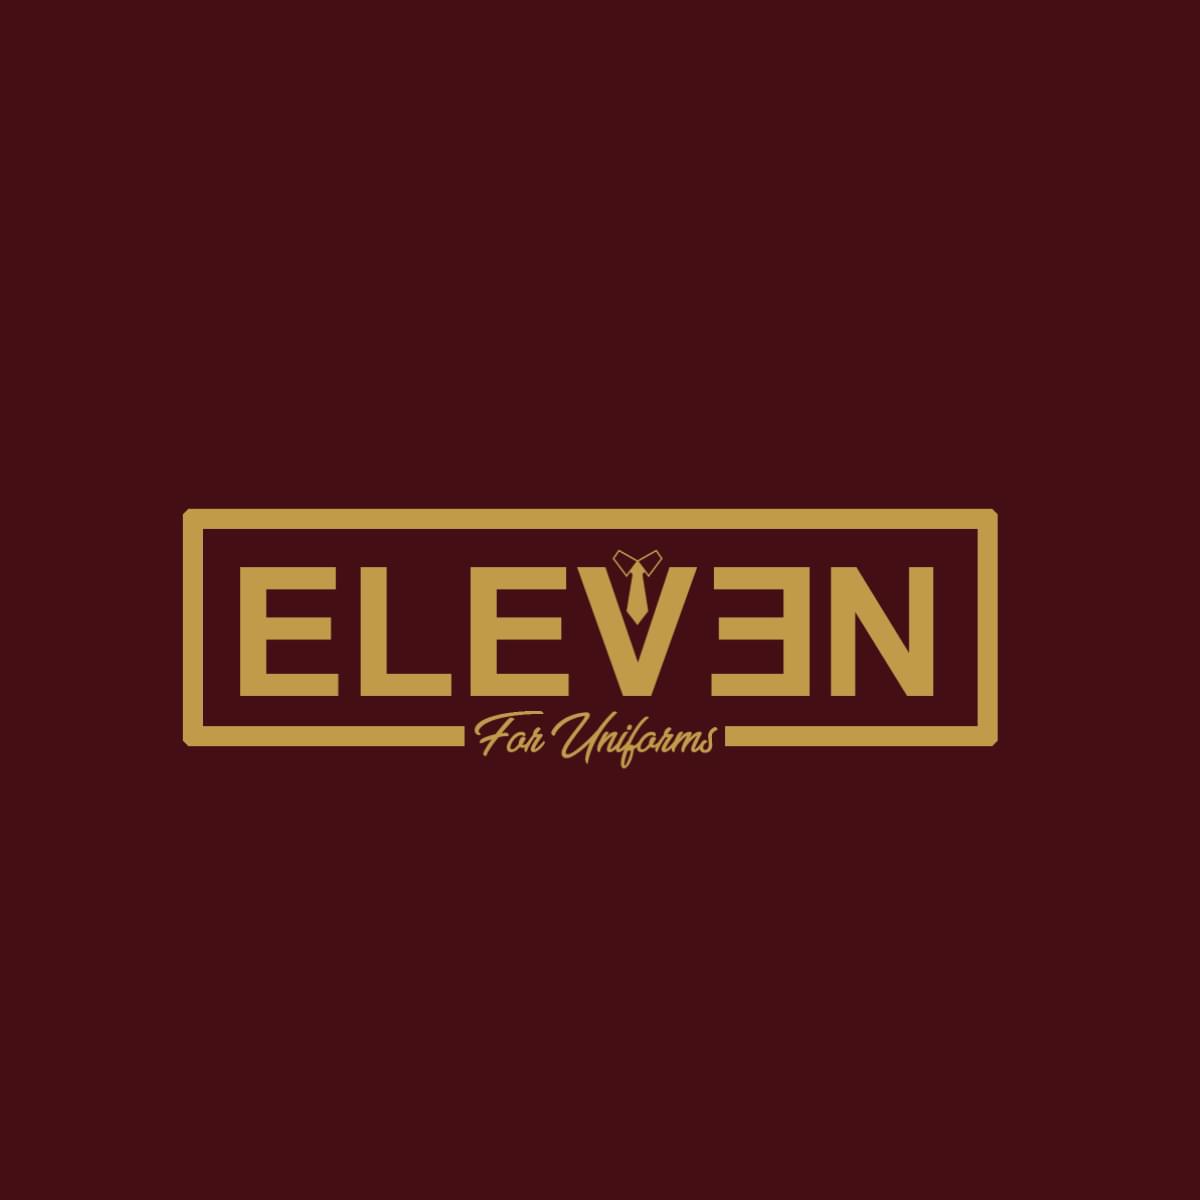 Eleven uniform